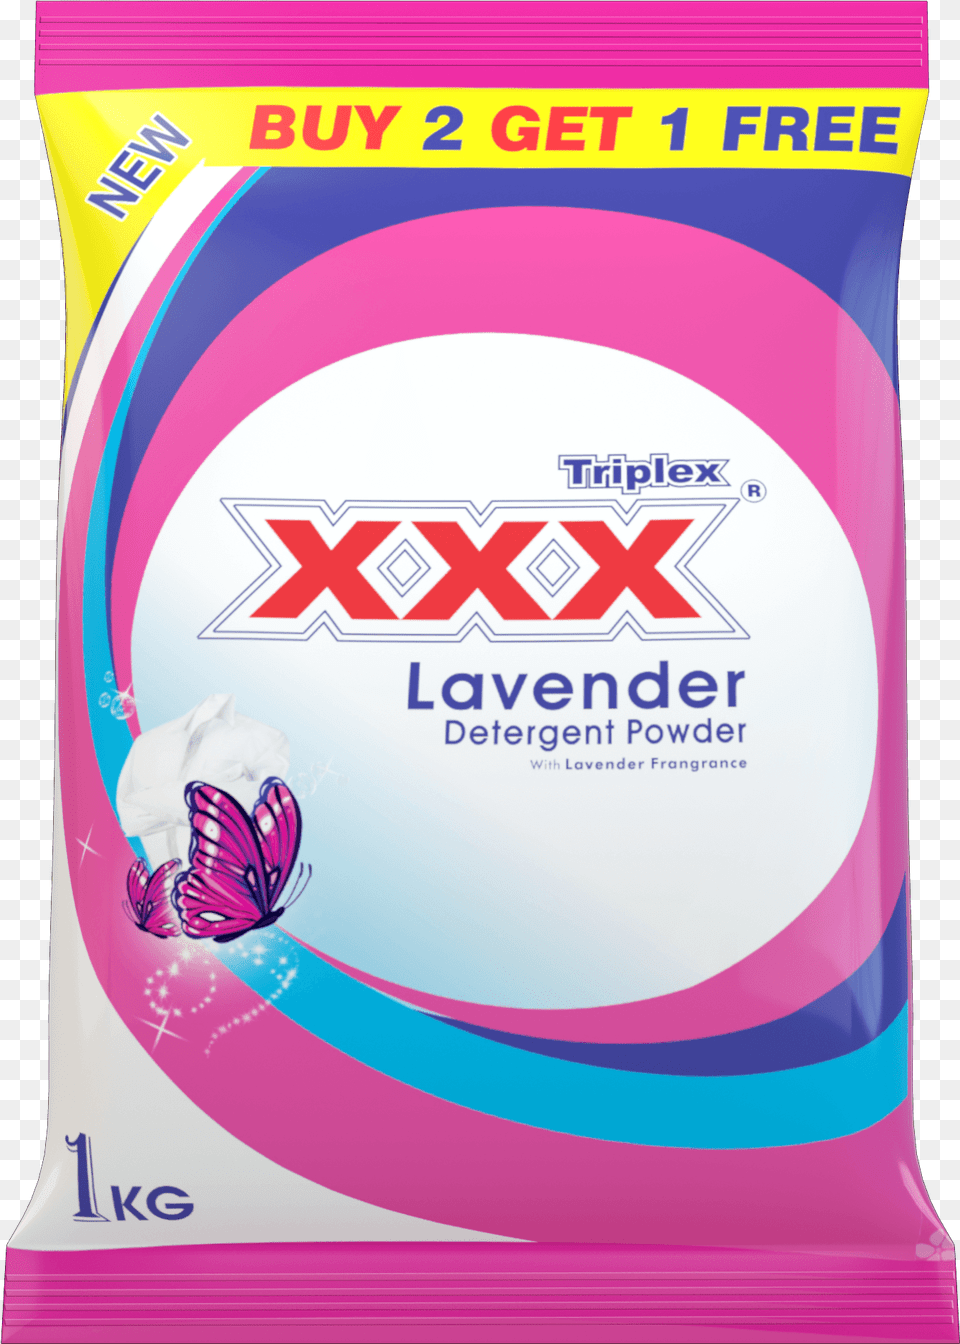 Lavander Plus Front 1kg Lavender, Can, Tin Free Png Download